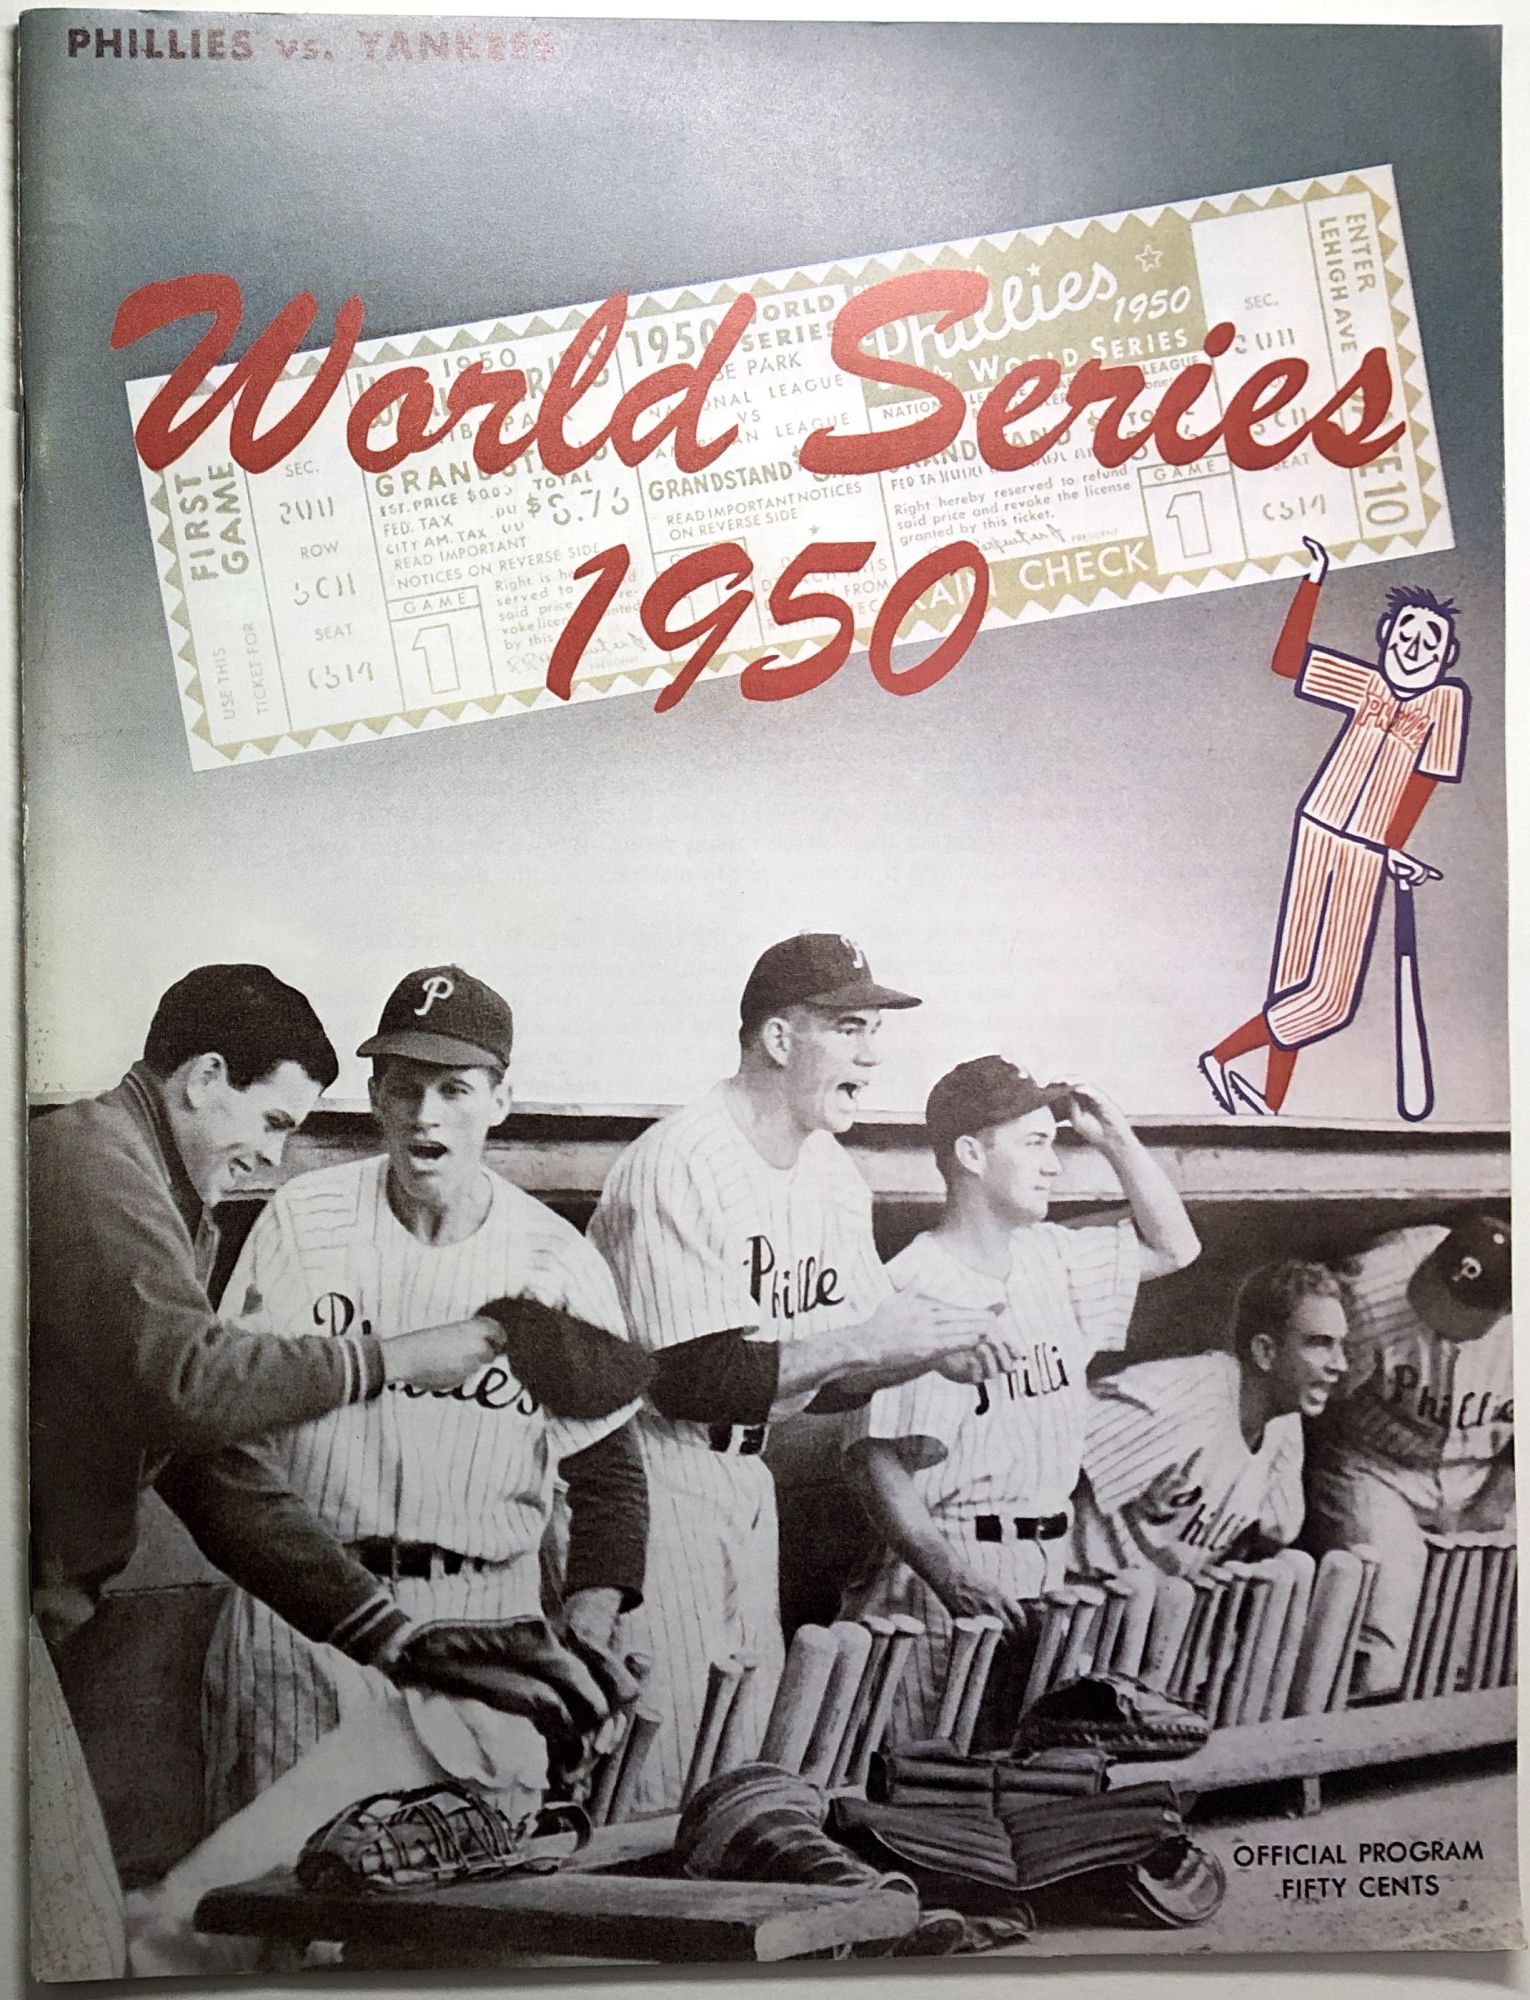 World Series 1950, Official Program, Phillies vs. Yankees reprint by New  York Yankees Baseball Philadelphia Phillies on Common Crow Books